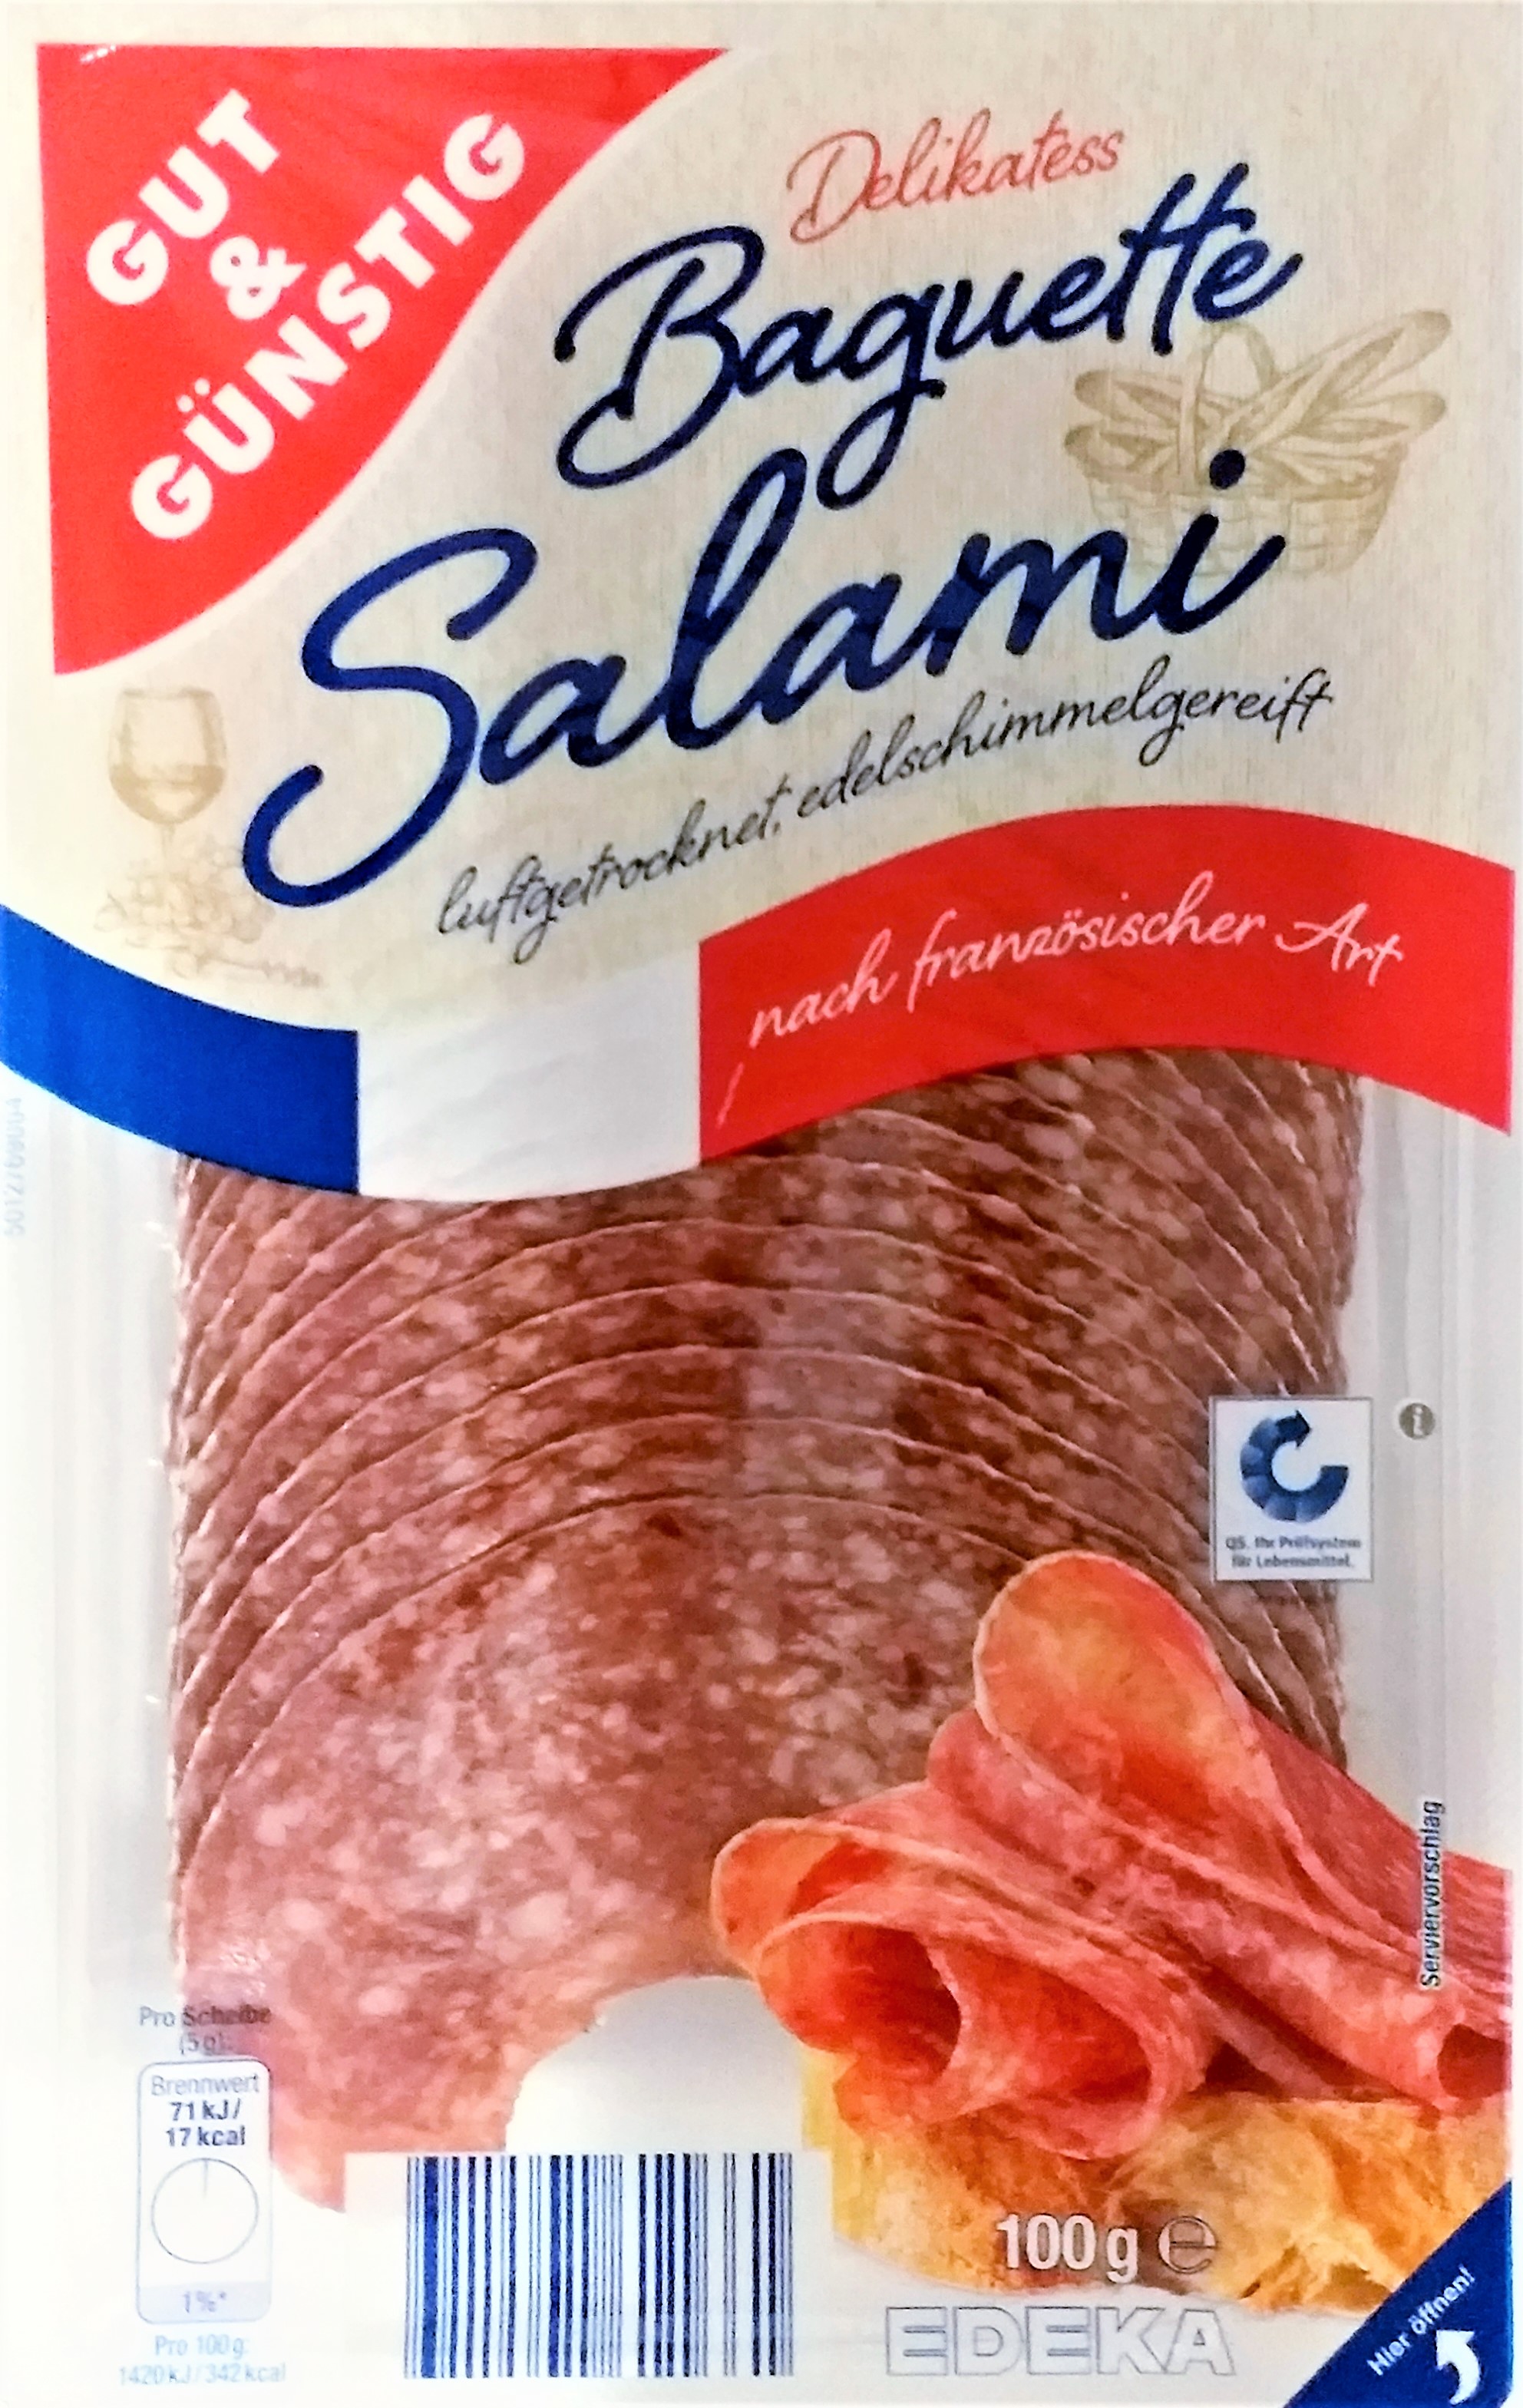 G&G Baguette Salami 100g QS